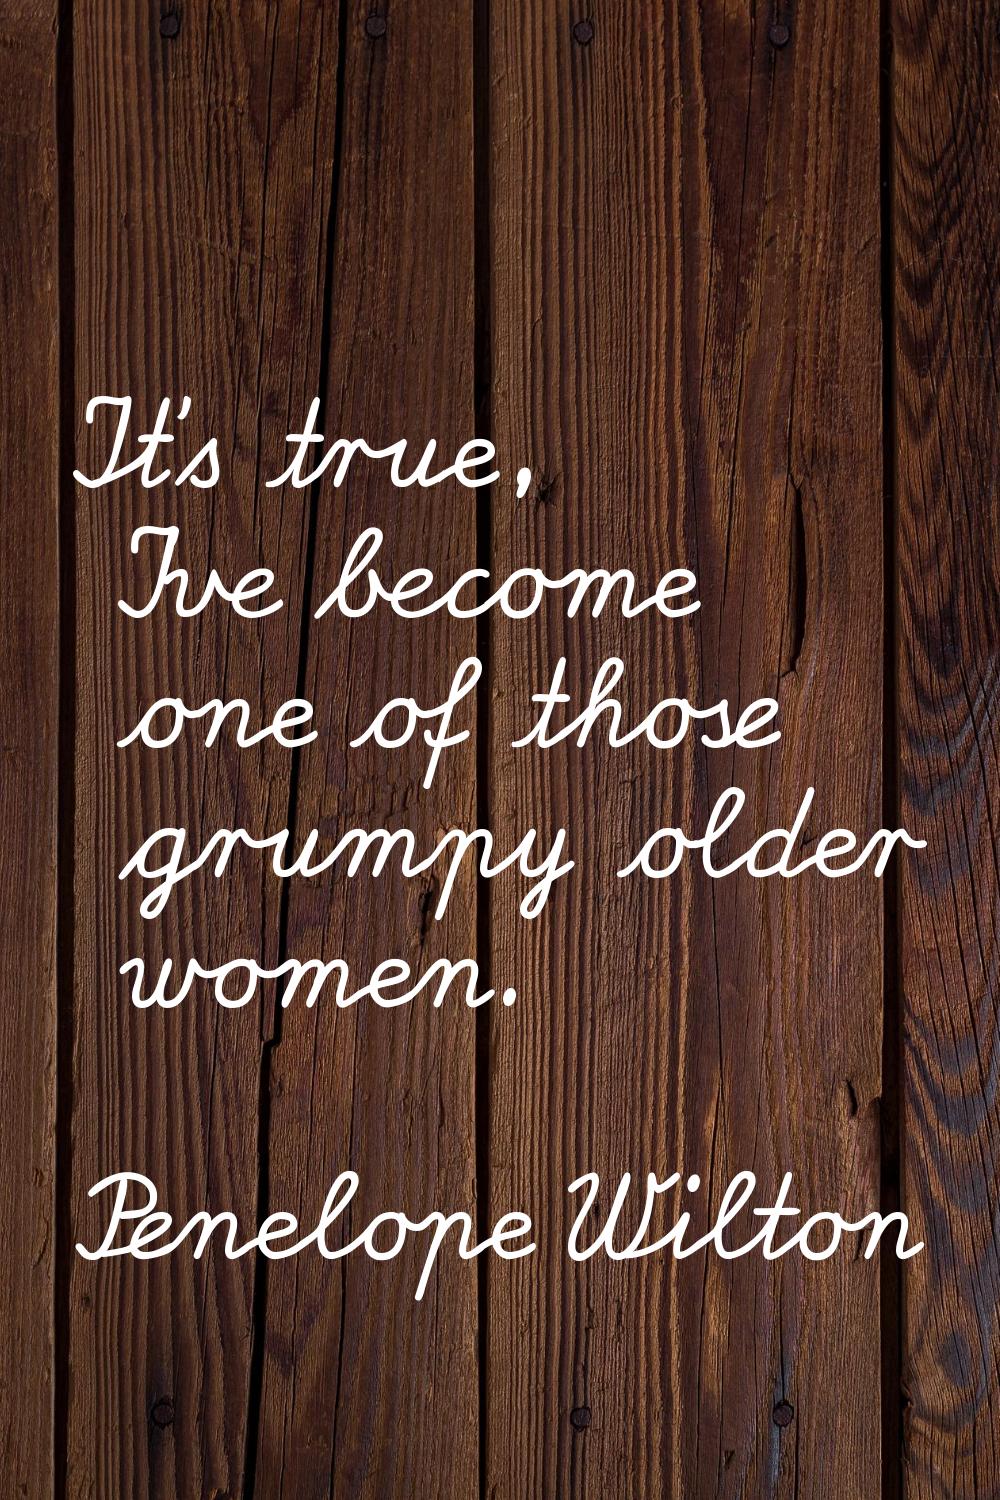 It's true, I've become one of those grumpy older women.